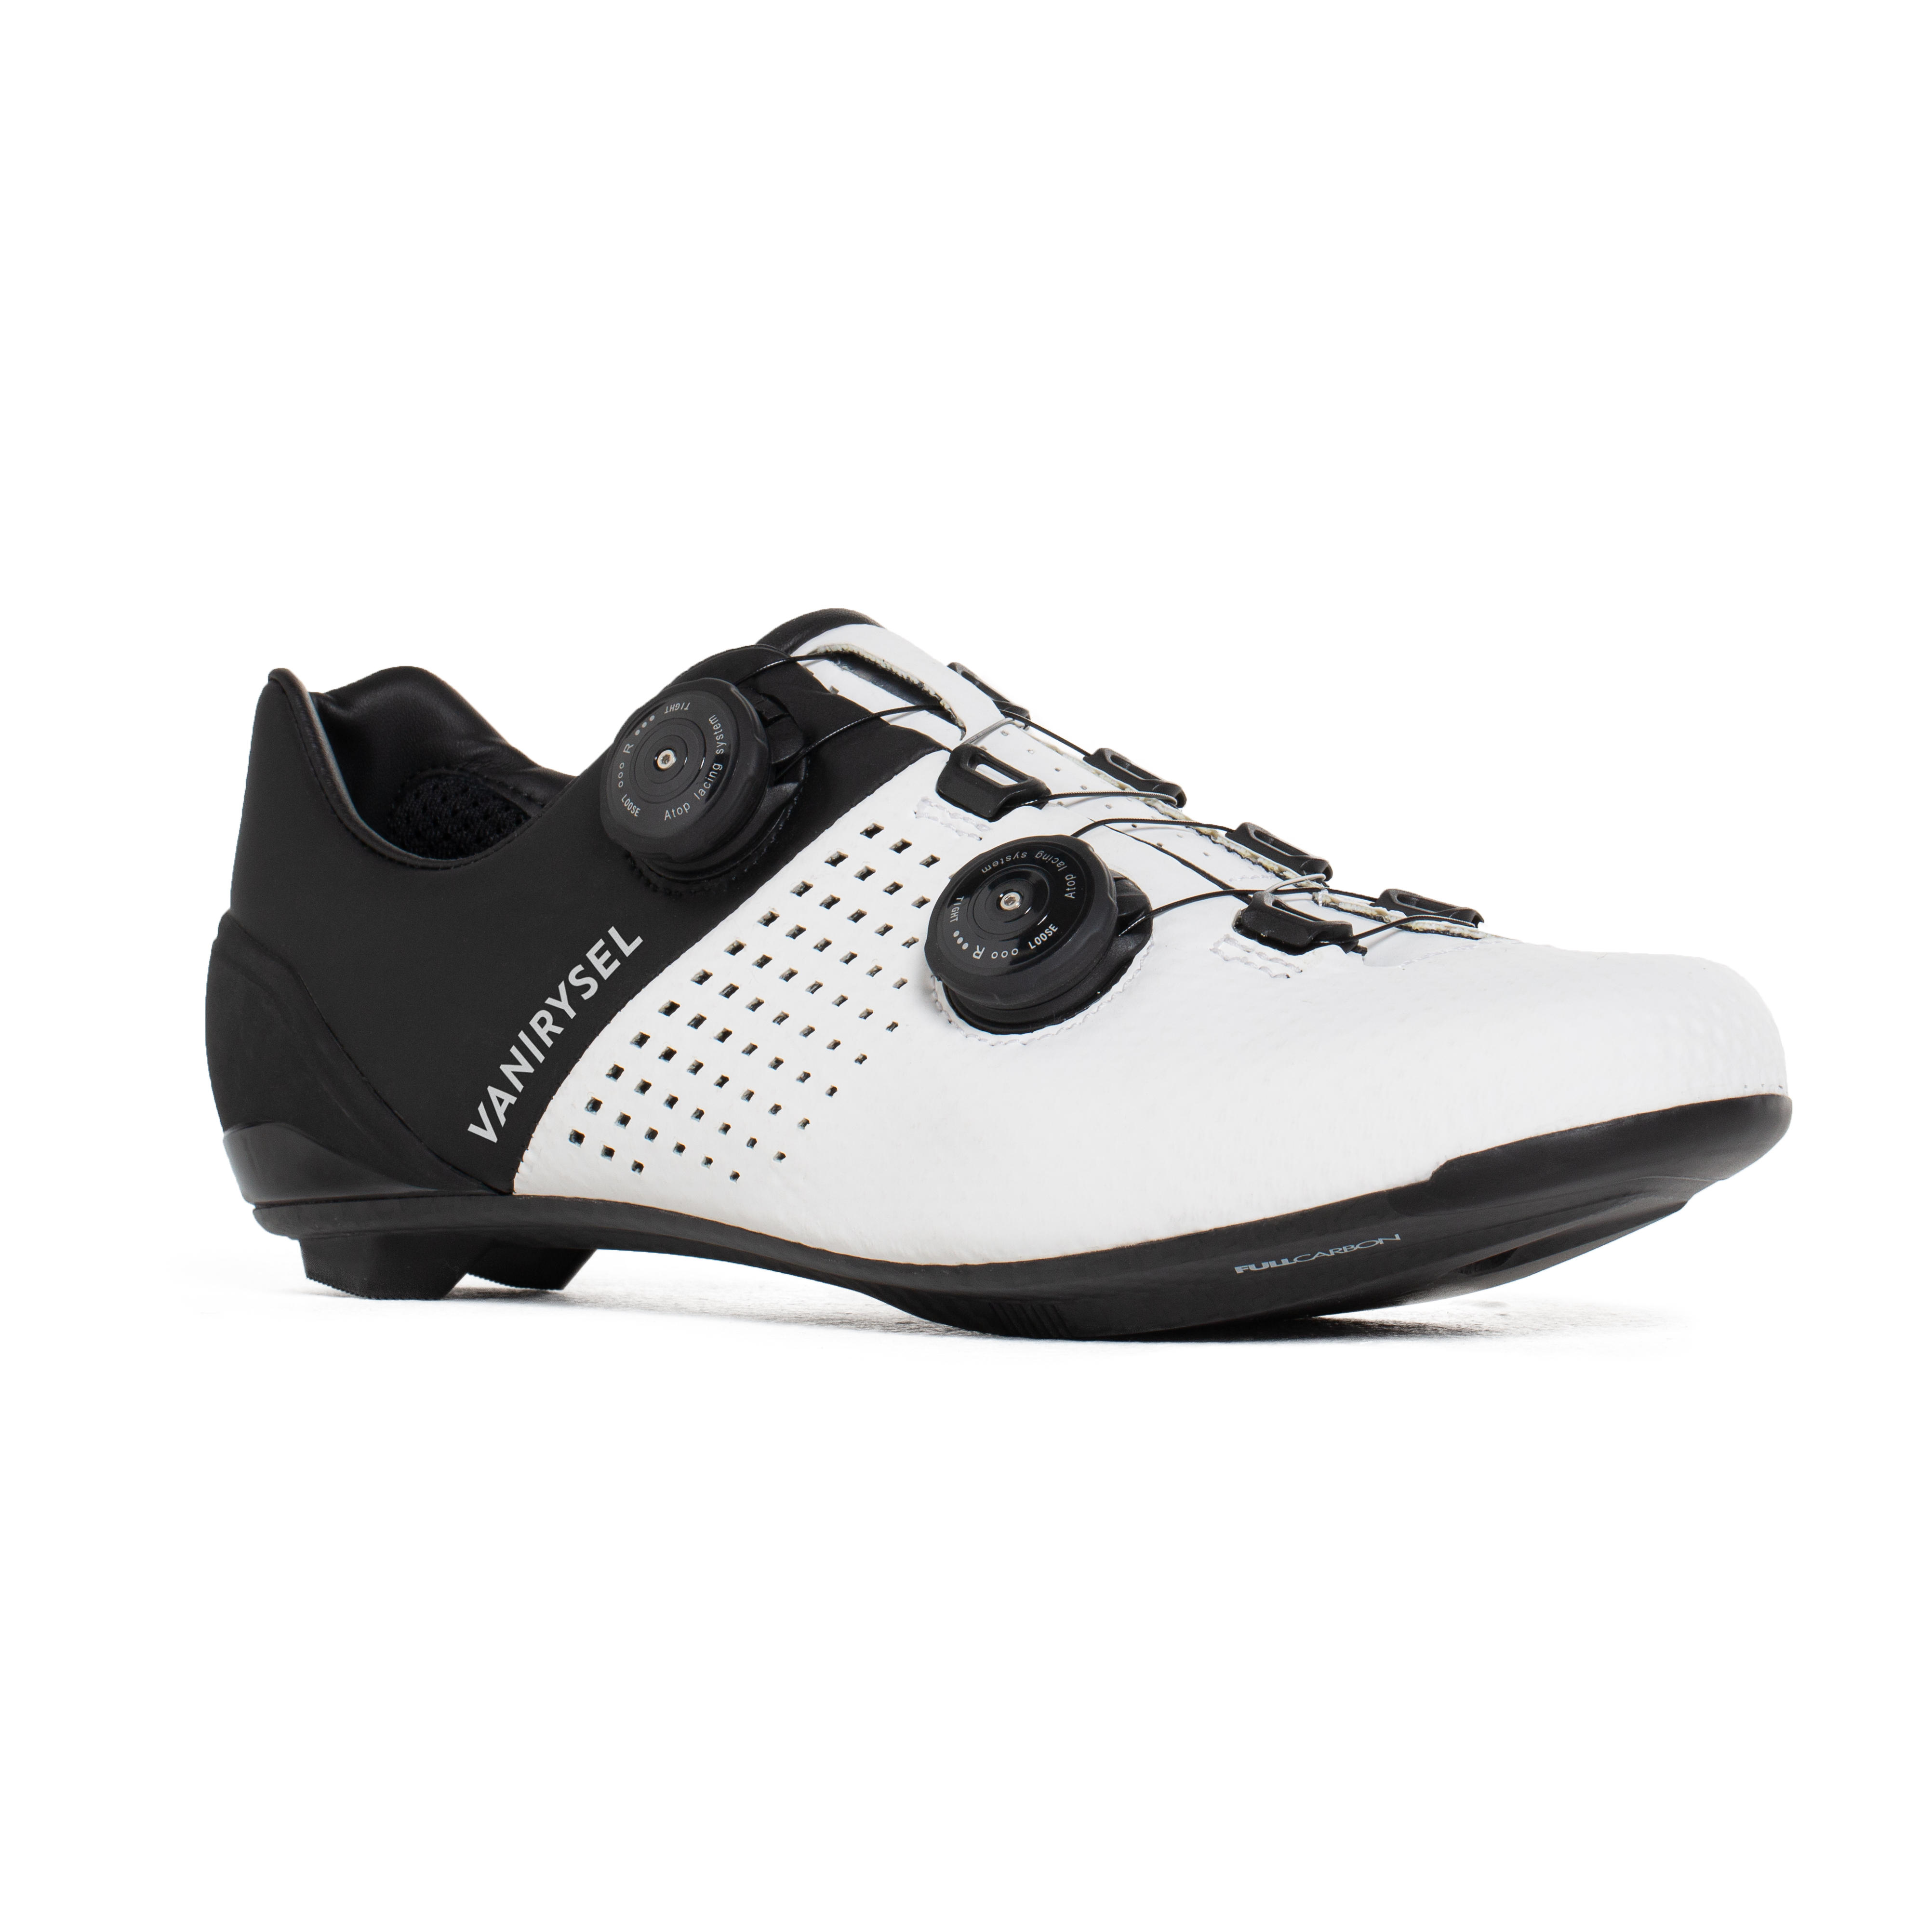 Van Rysel Sport Cycling Shoes - White